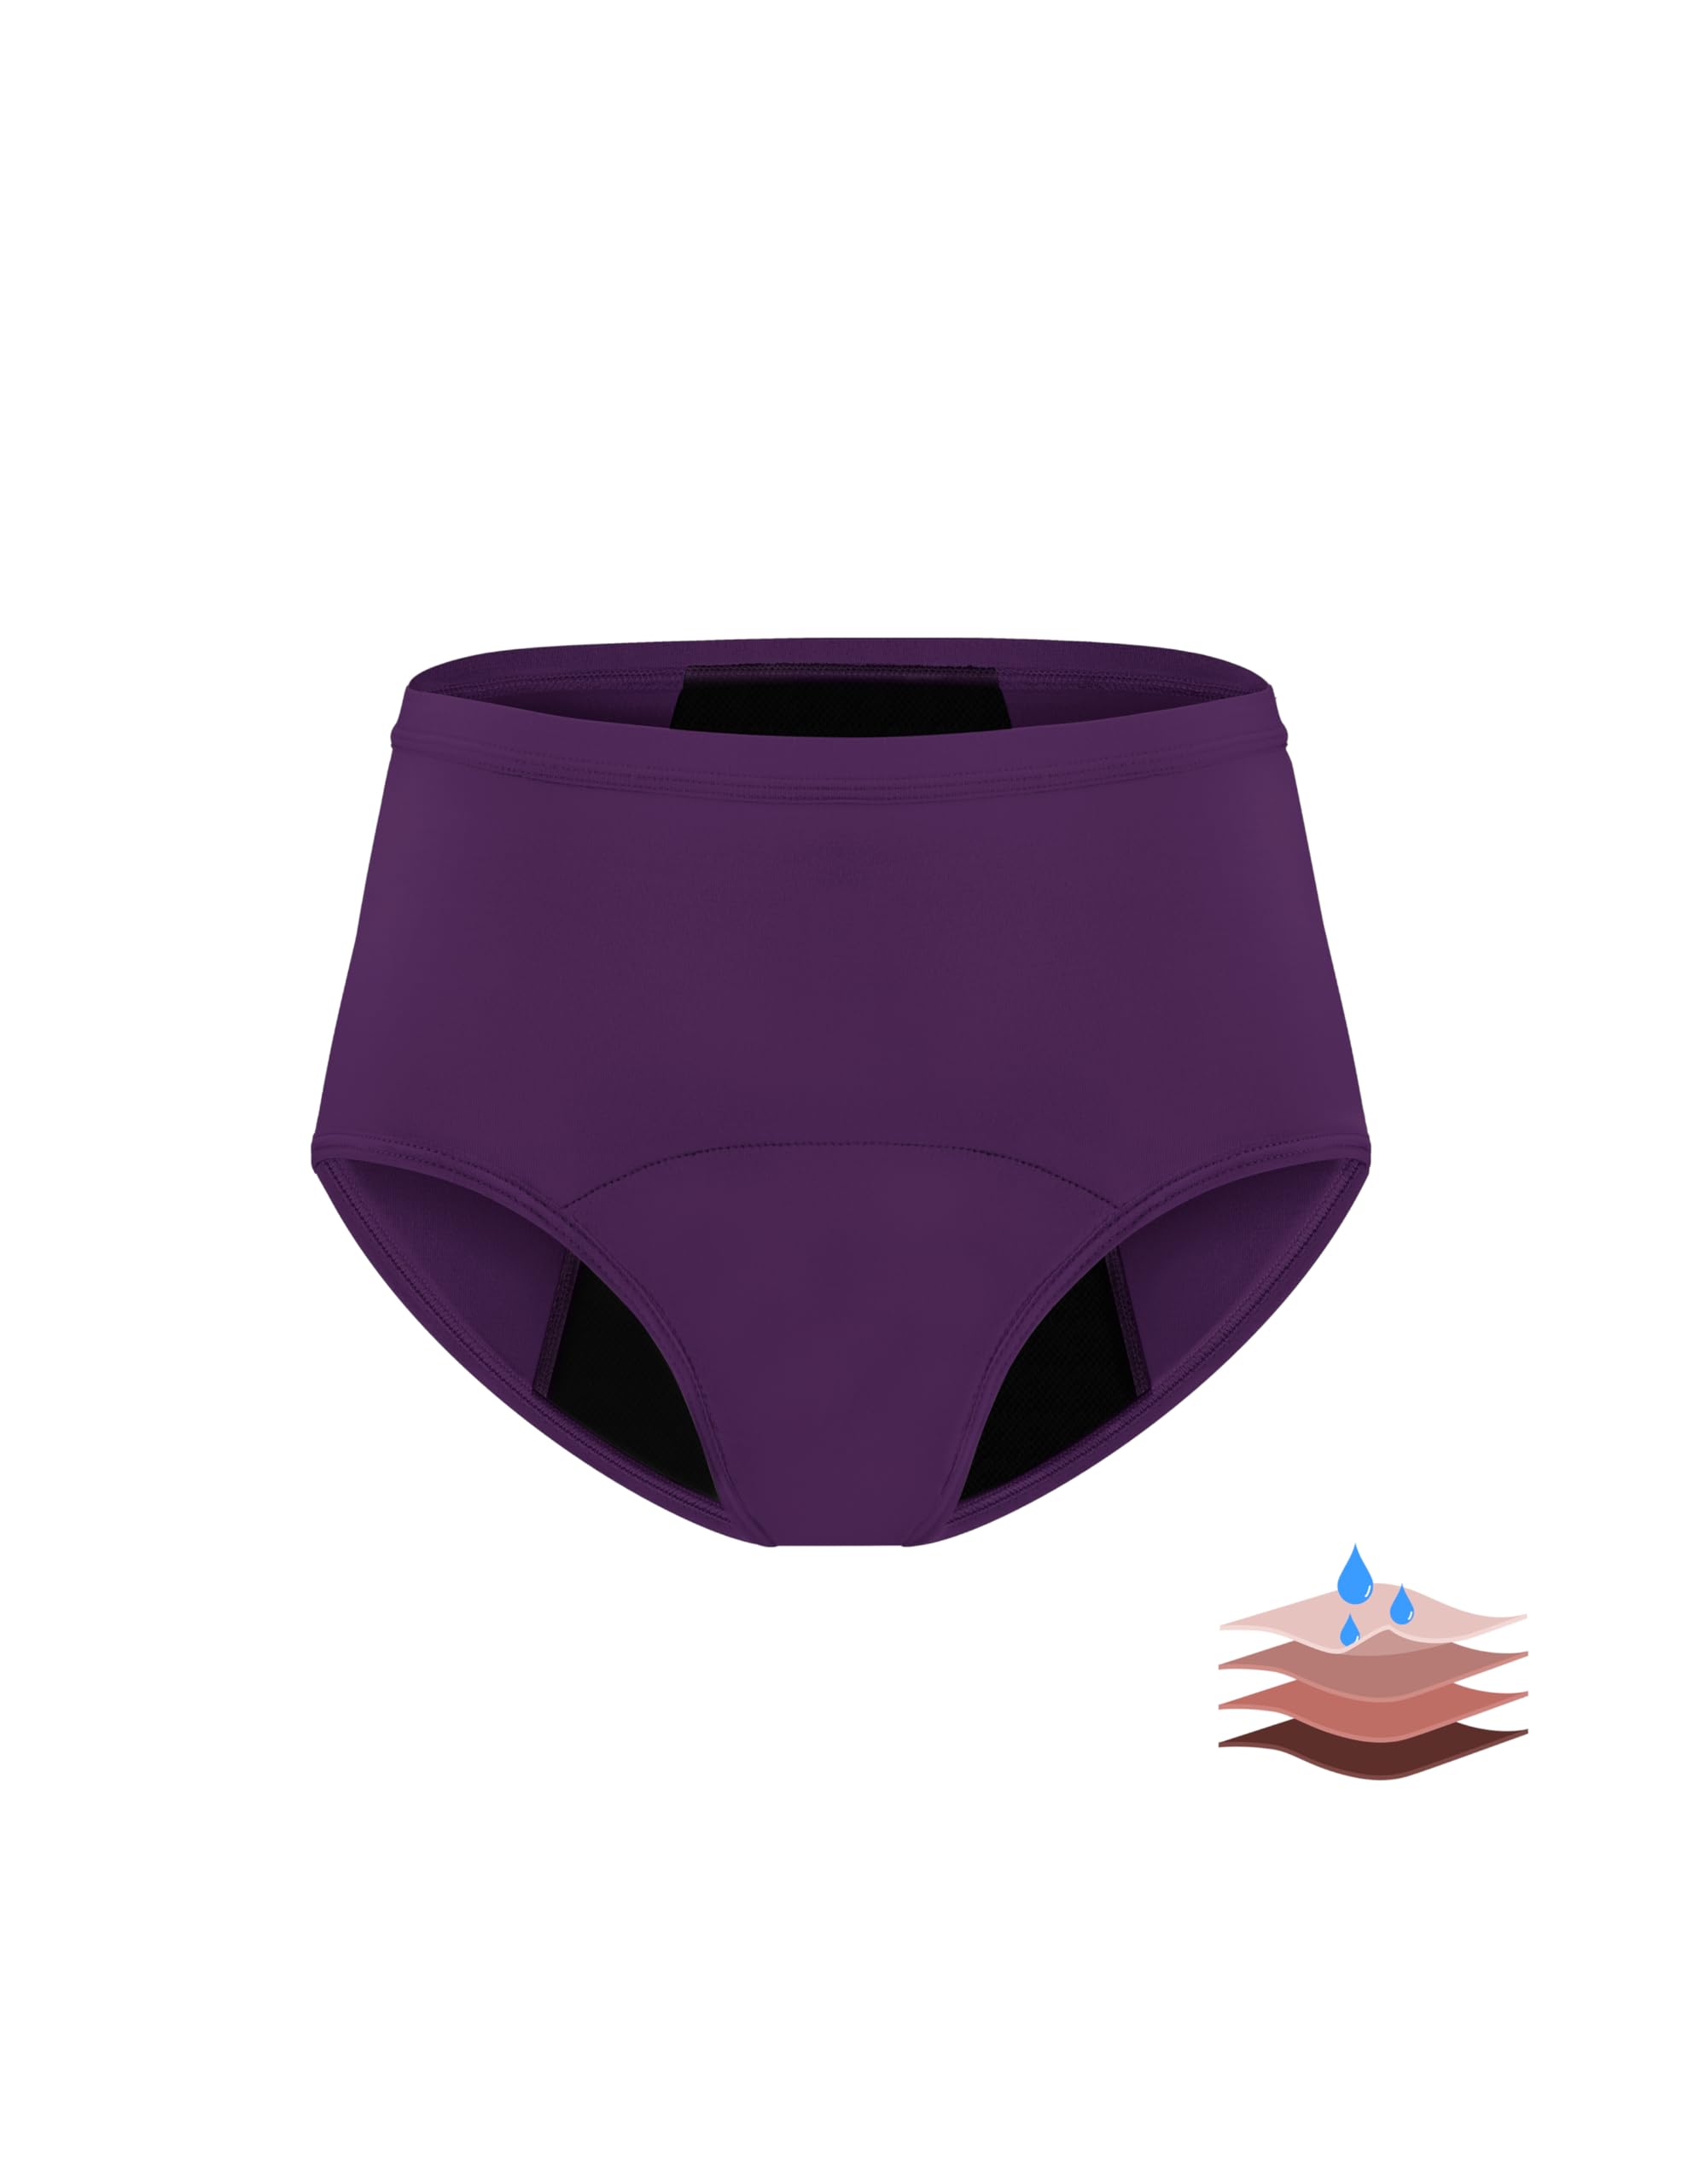 Leovqn Period Pants for Women Lace Trim Menstrual Underwear Heavy Flow Period  Knickers Leakproof Postpartum Briefs